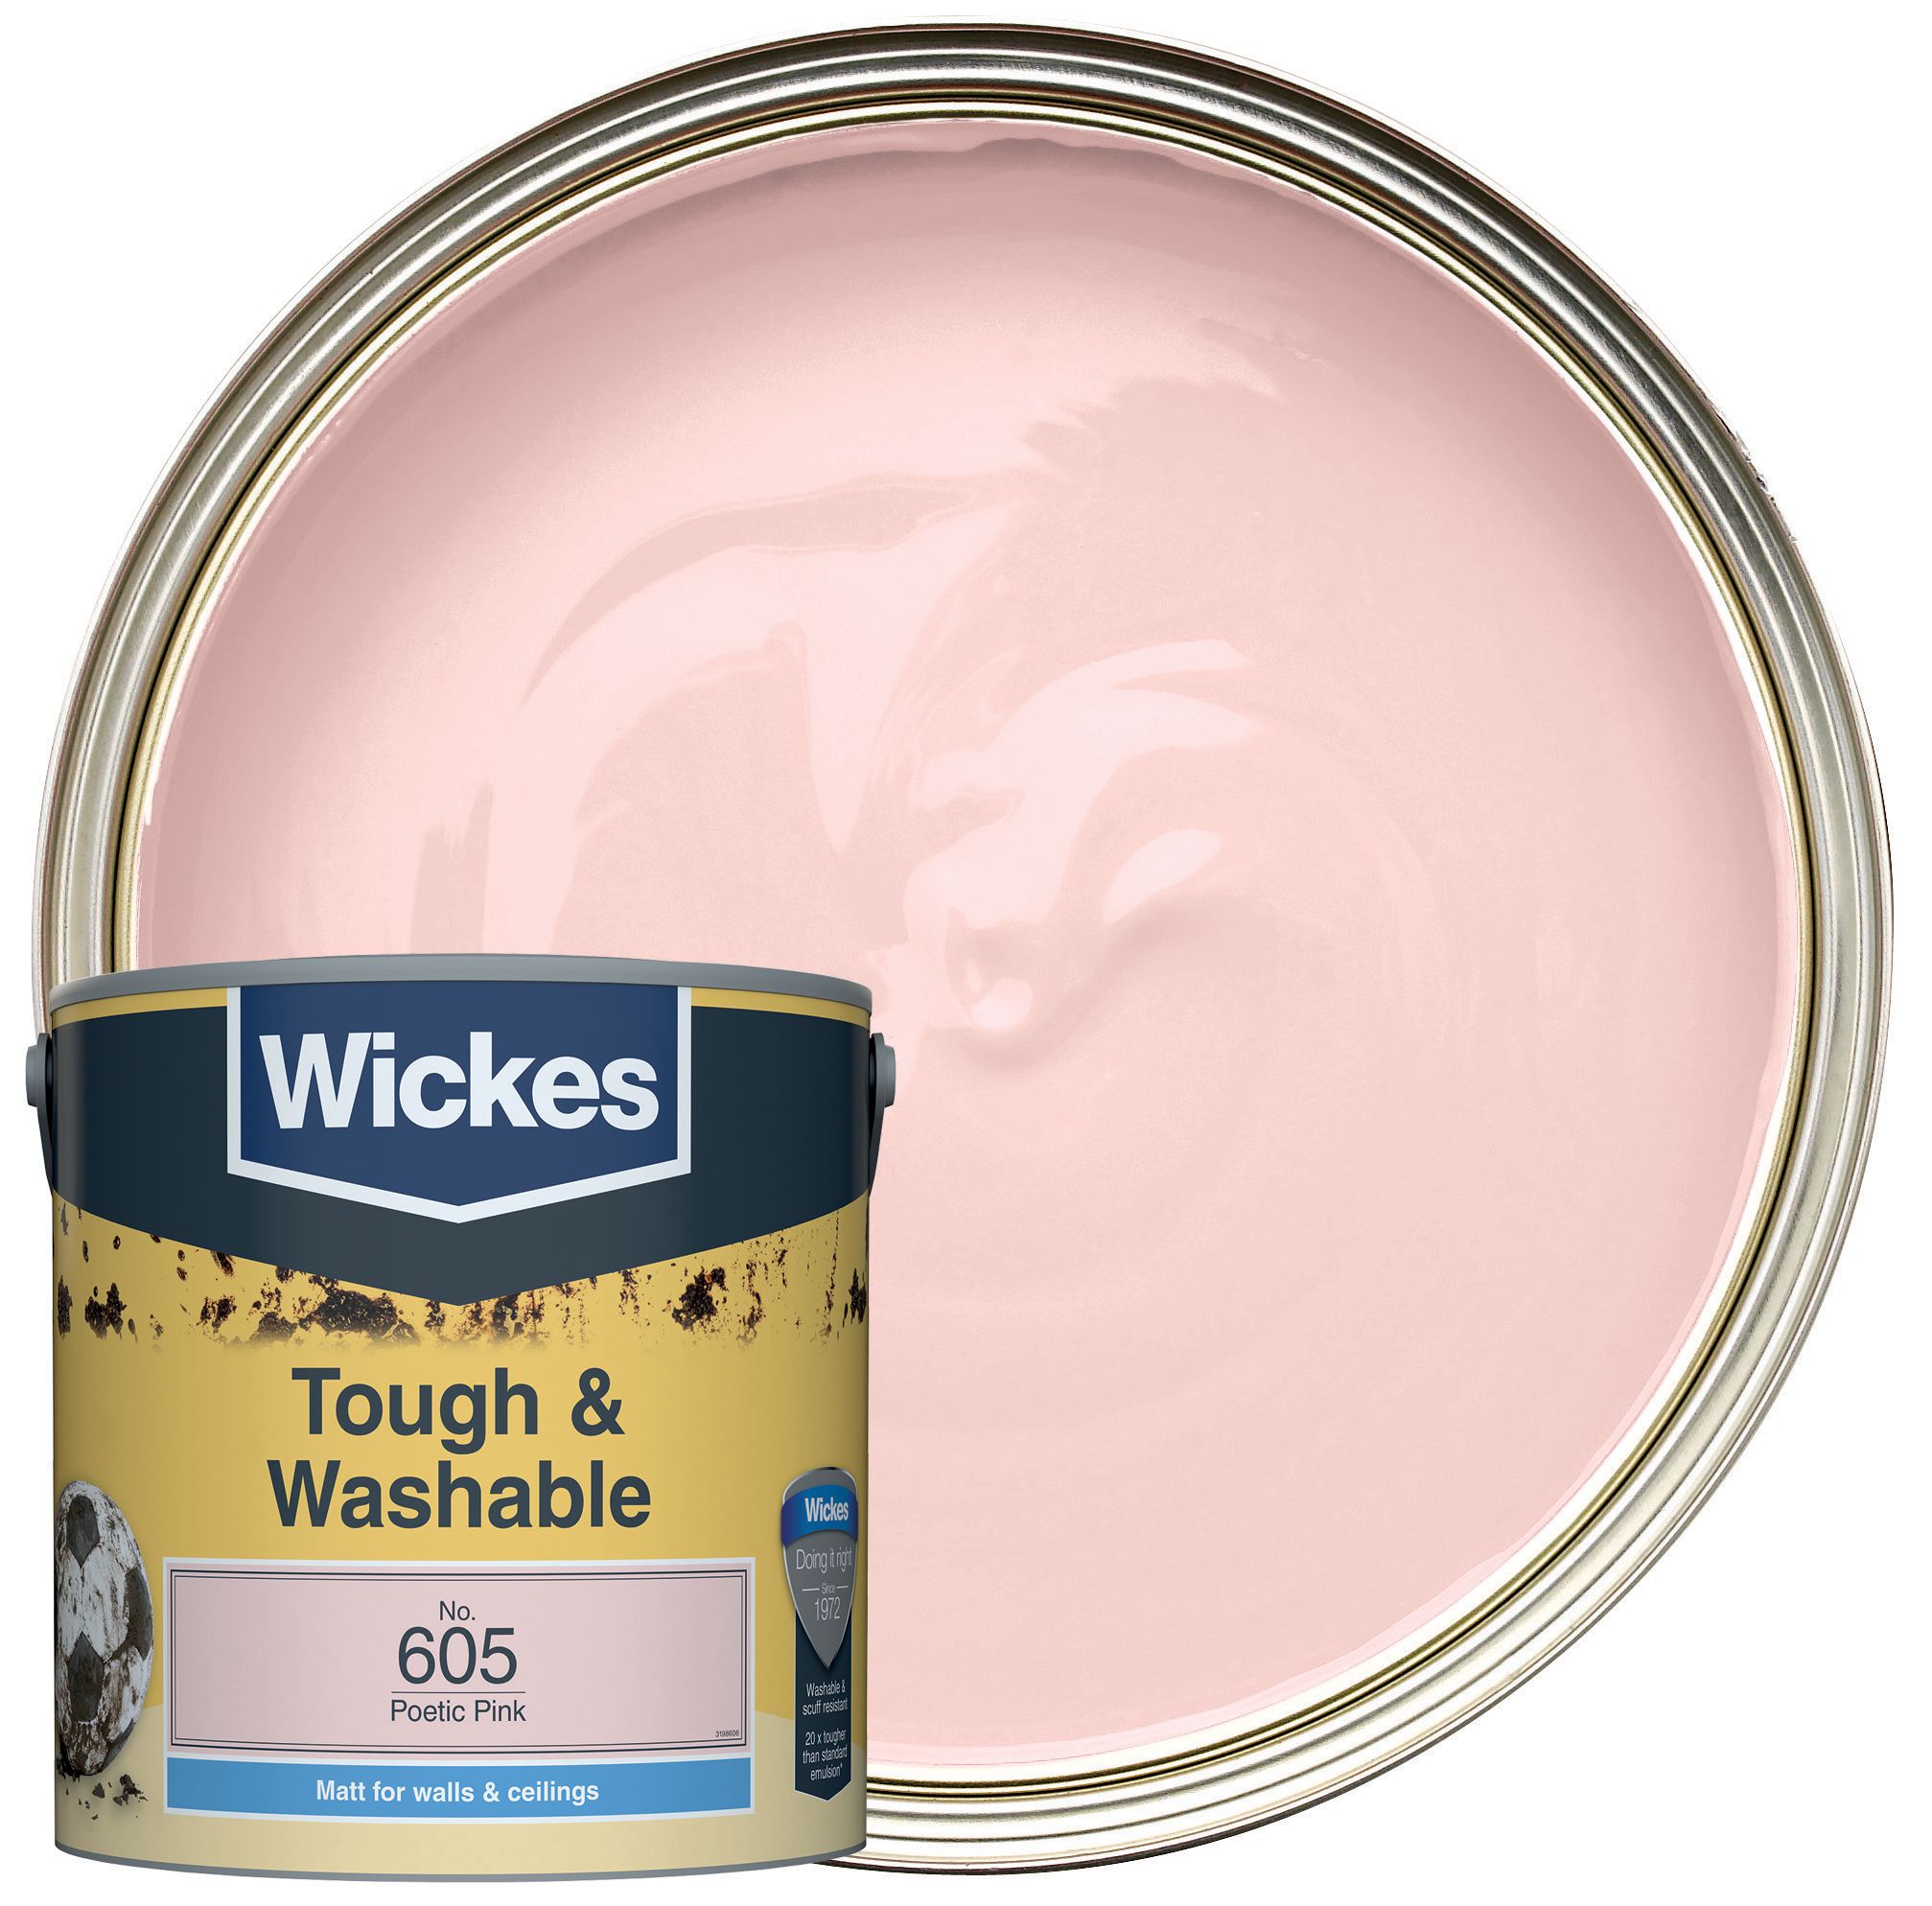 Image of Wickes Tough & Washable Matt Emulsion Paint - Poetic Pink No.605 - 2.5L